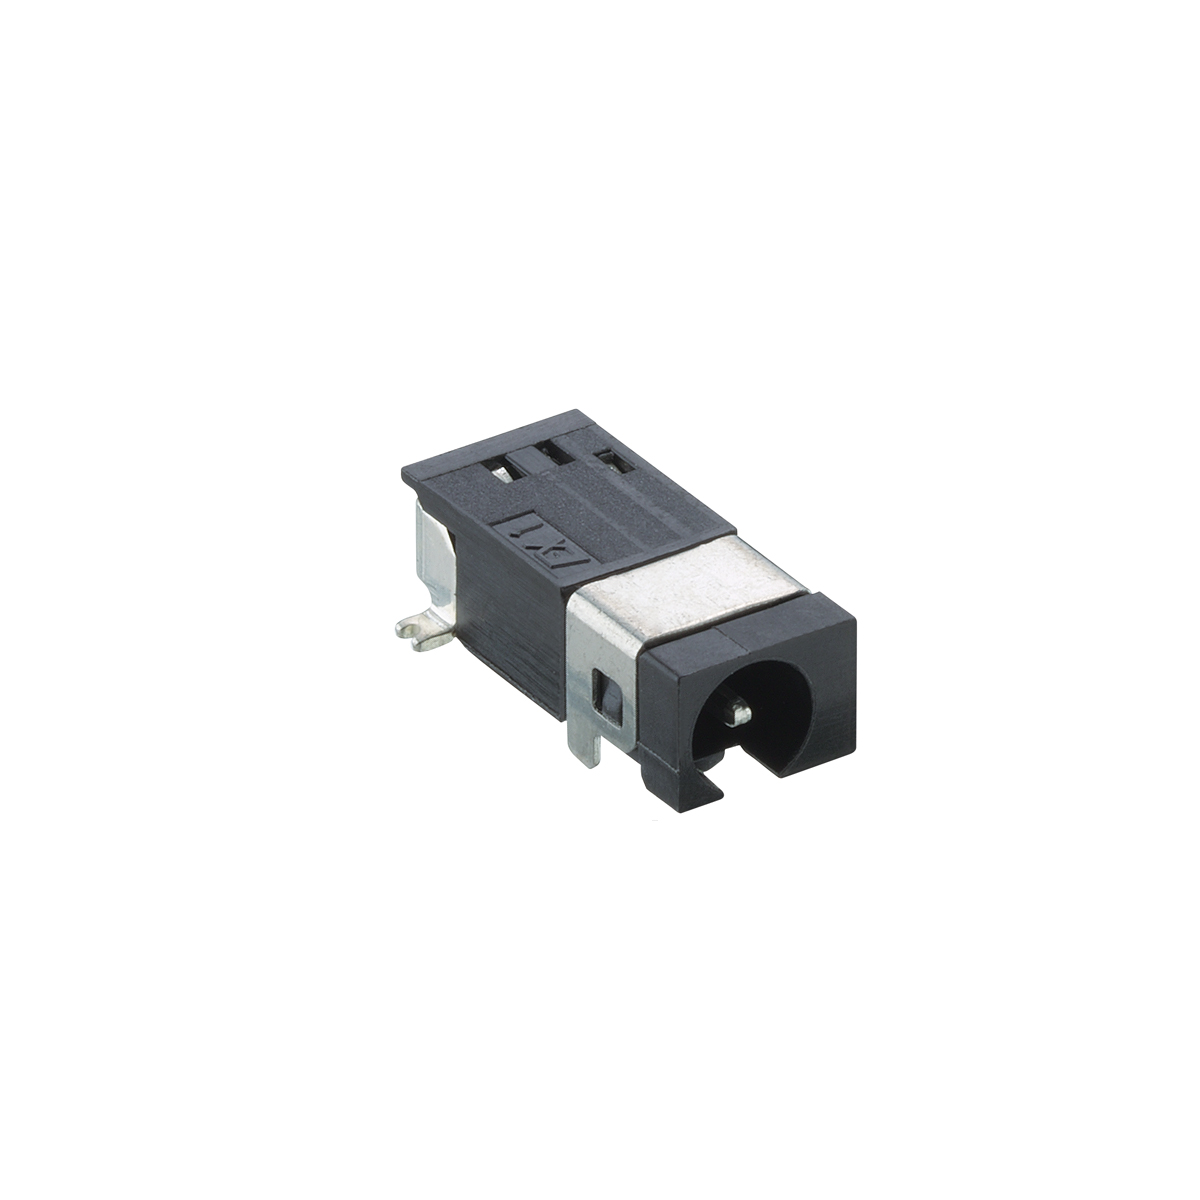 Lumberg: 1613 25 (Series 16 | Power supply connectors)